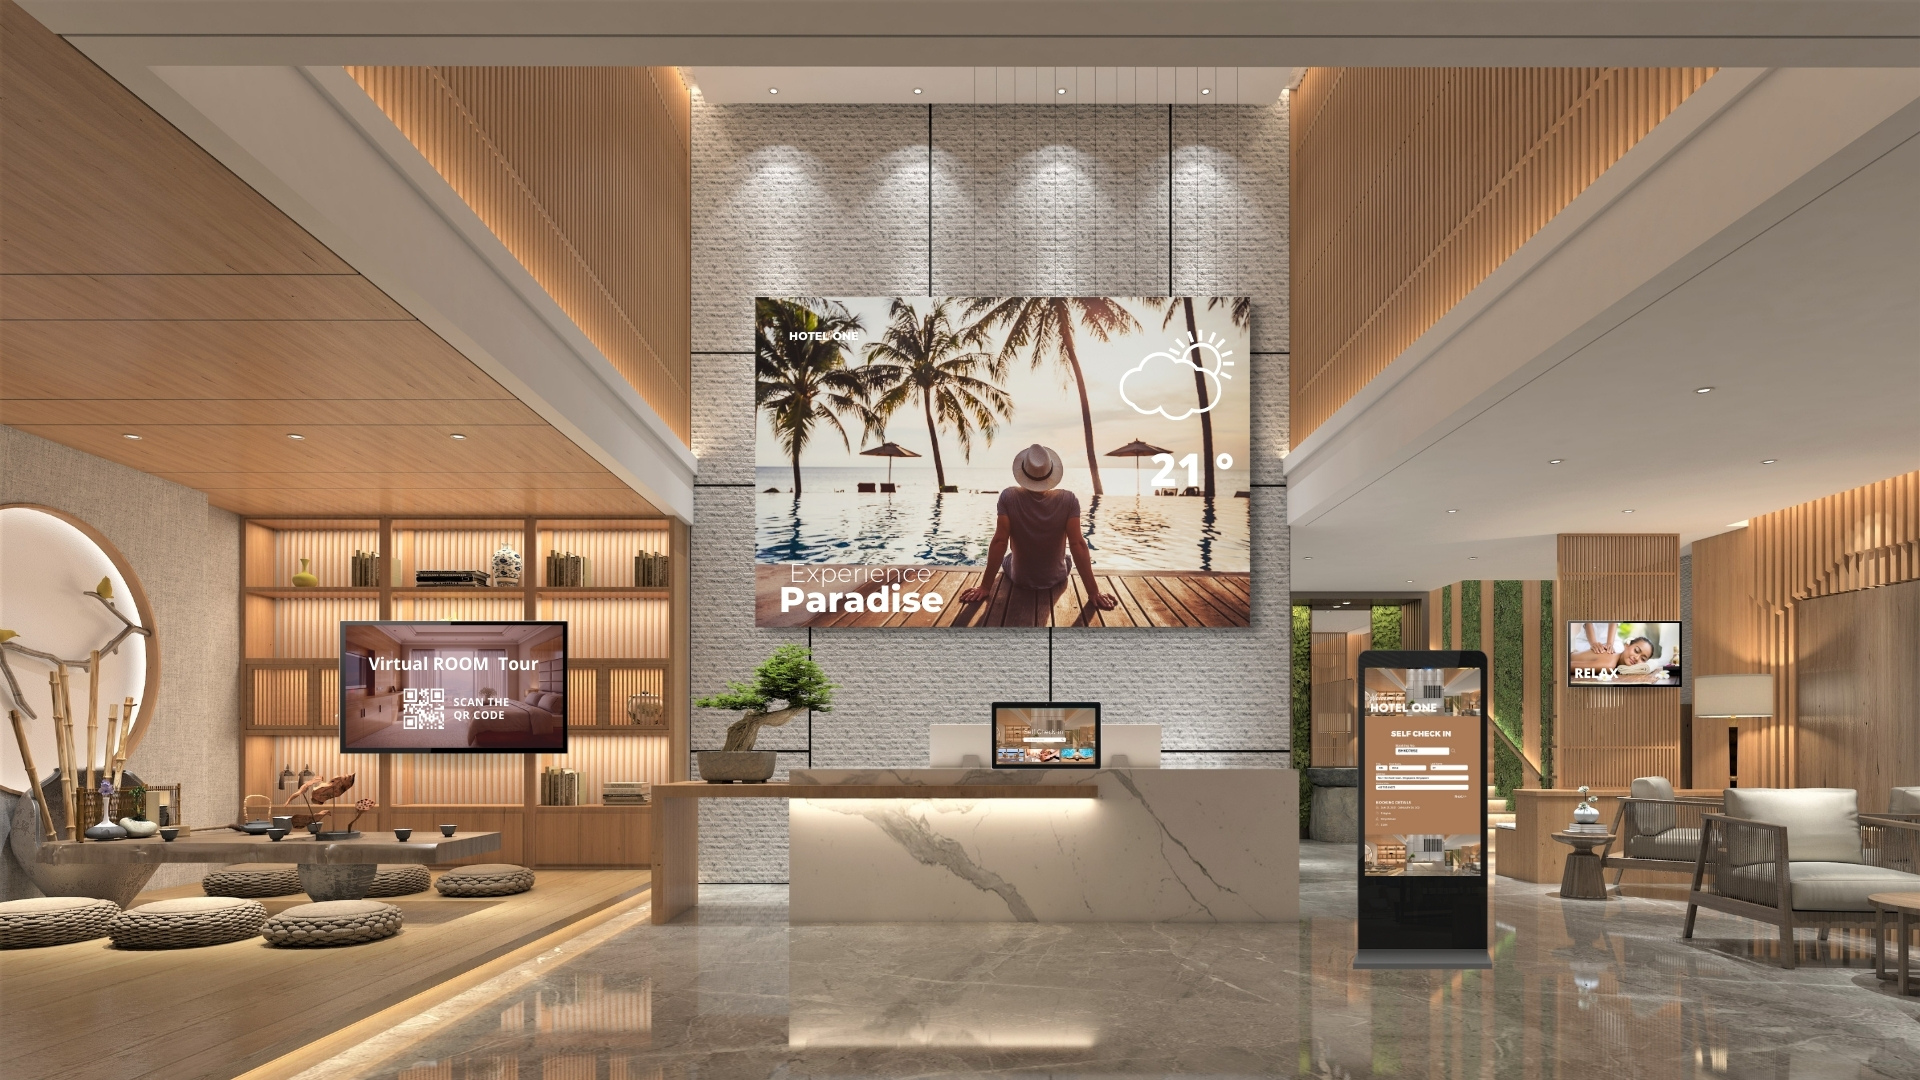 Hotel Digital Signage Display